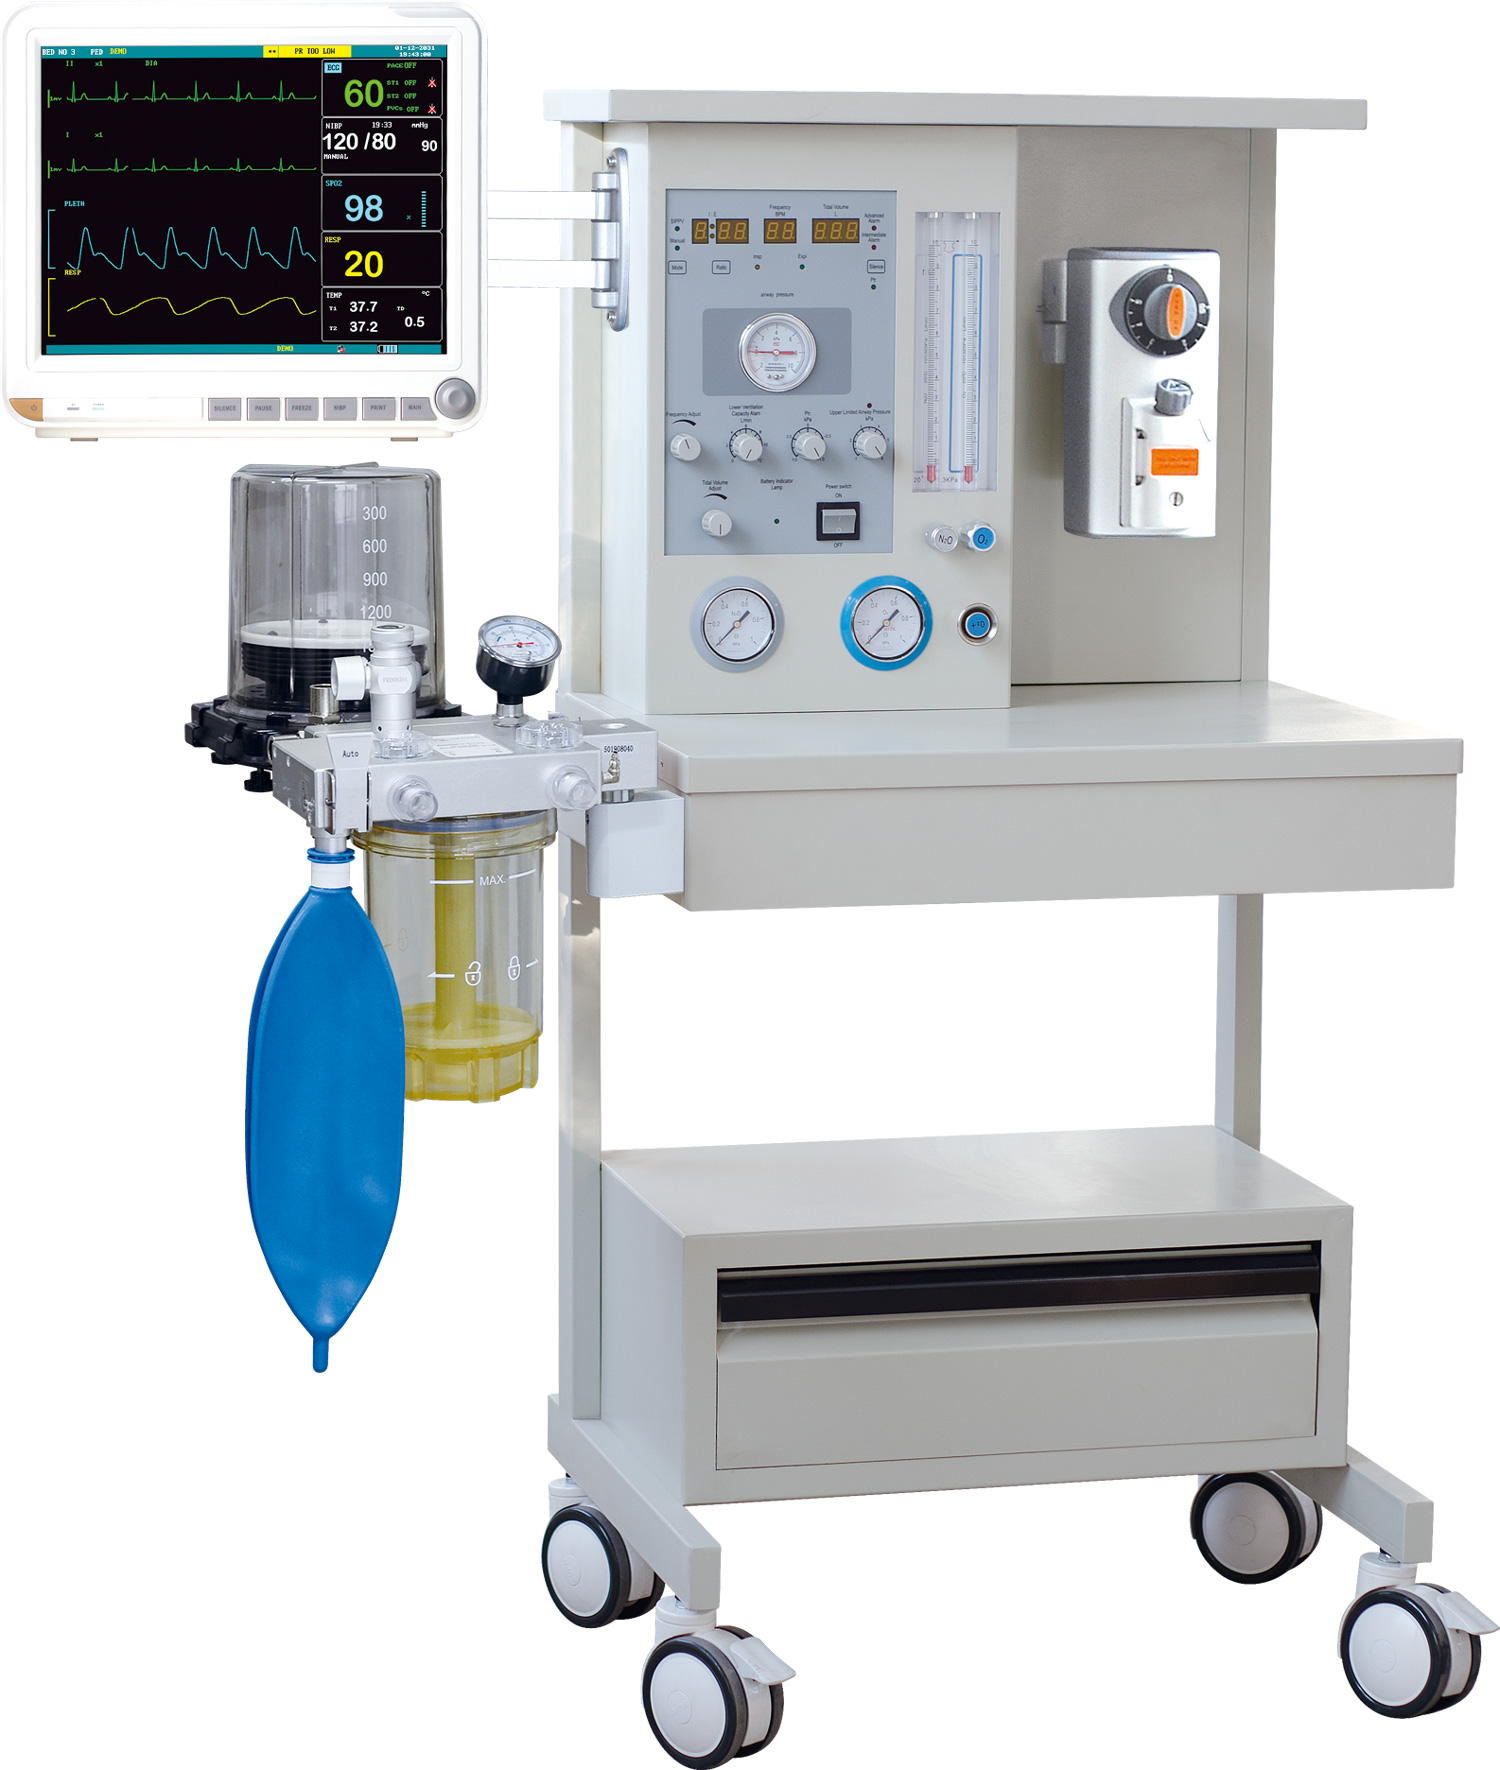 Matériel médical Anesthésie respiratoire / Machine d'anesthésie / Unité d'anesthésie pour le traitement